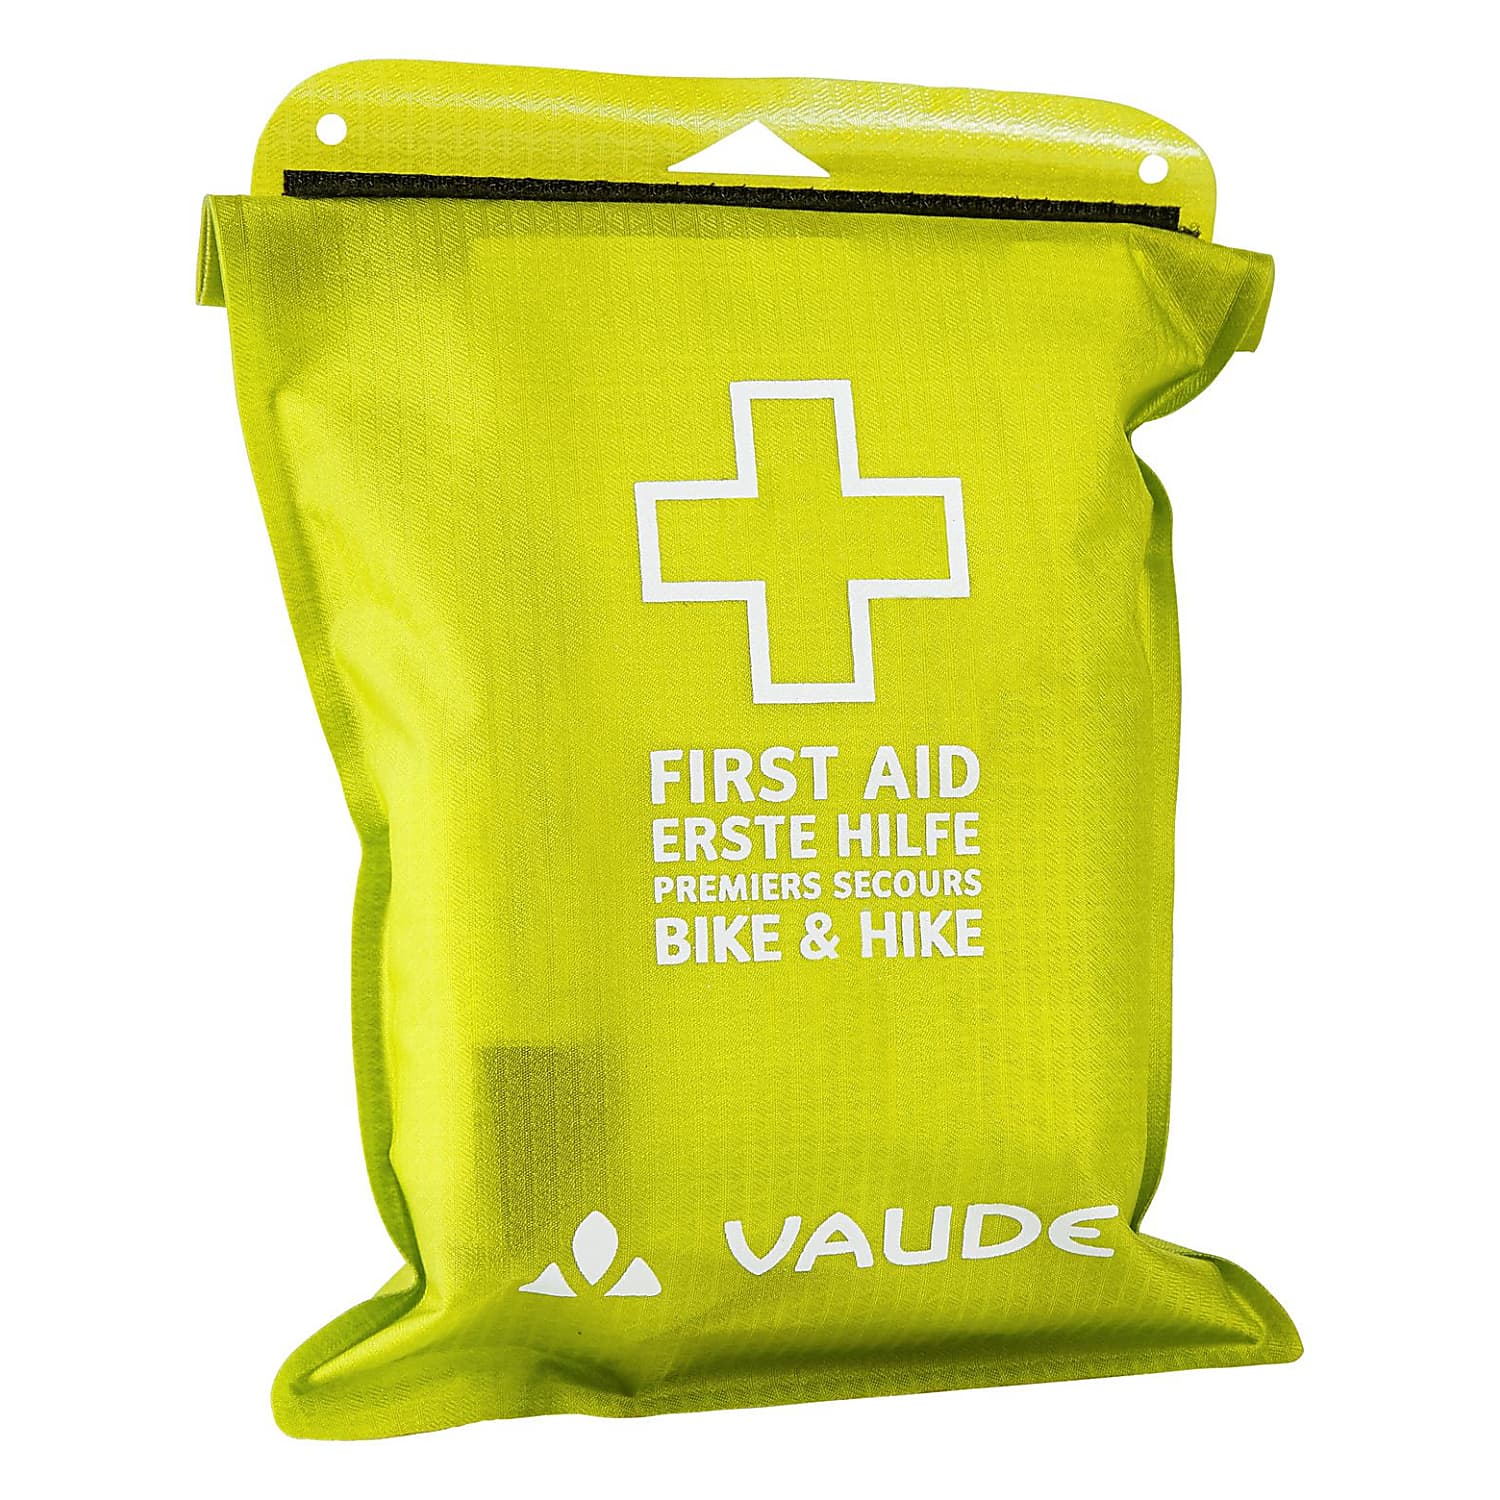 Ortovox First Aid Waterproof Mini - Erste Hilfe Set